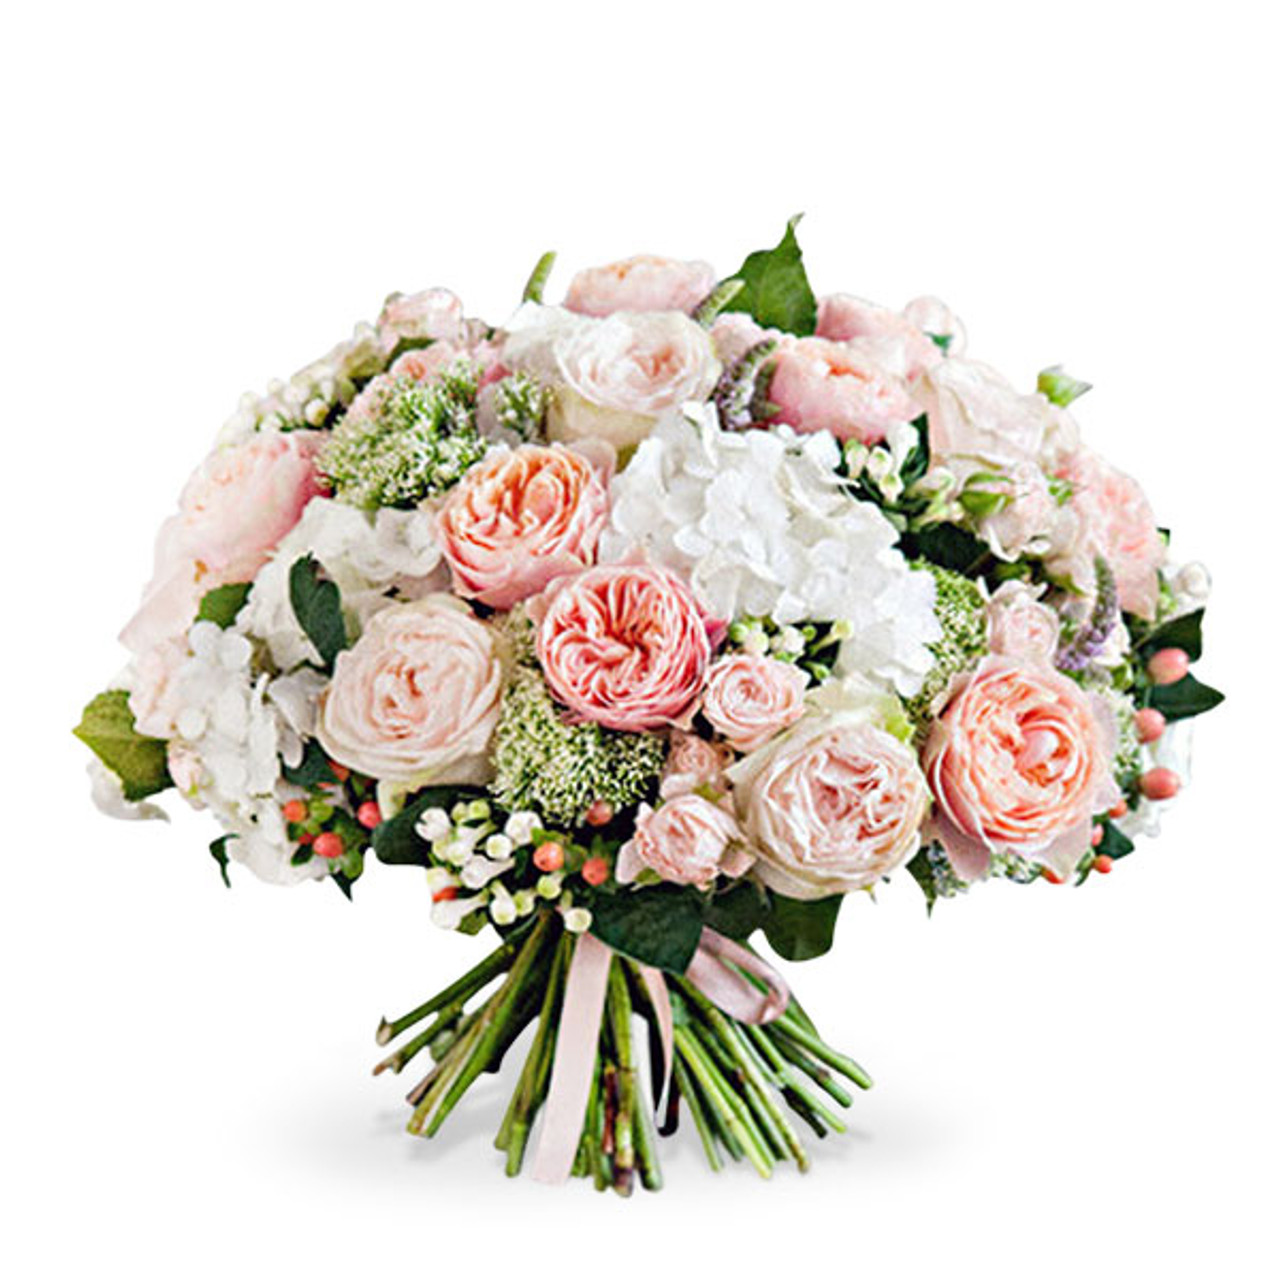 Peach Roses, luxury Vuvuzela Roses, Pink Spray Roses, White Hydrangeas, White Trachelium and White Bouvardia